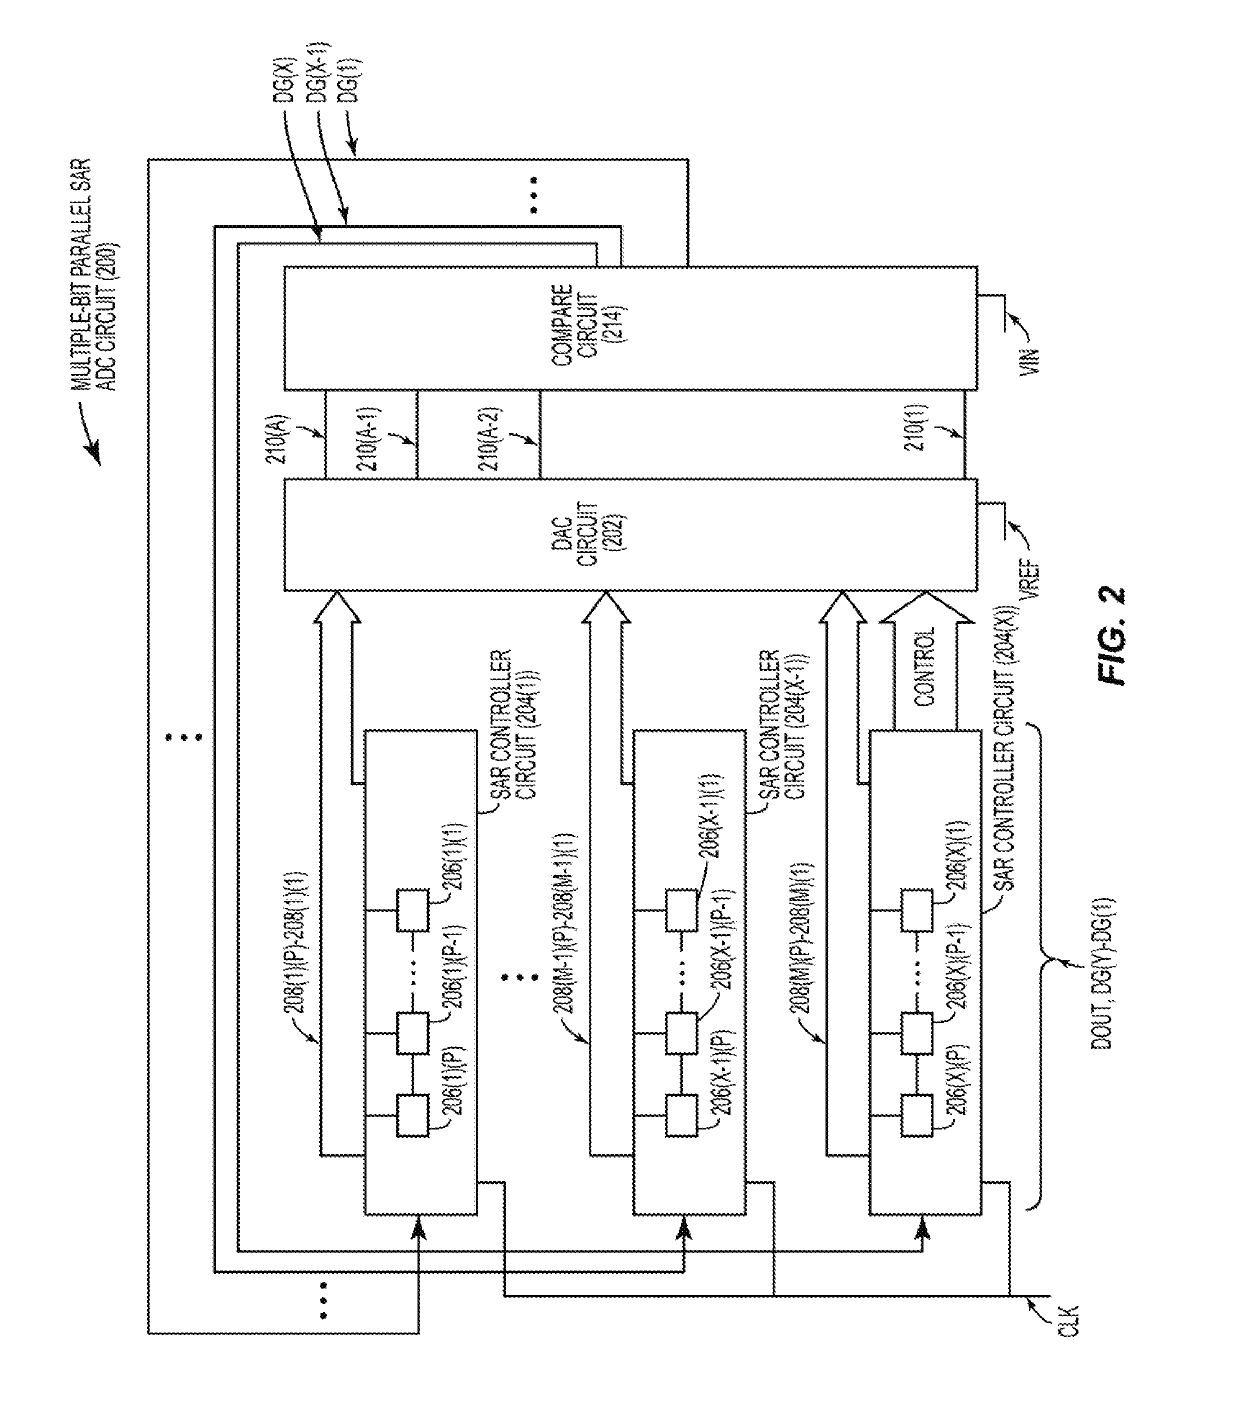 Digital-to-analog converter (DAC) circuits employing resistor rotator circuits configured to be included in analog-to-digital converter (ADC) circuits